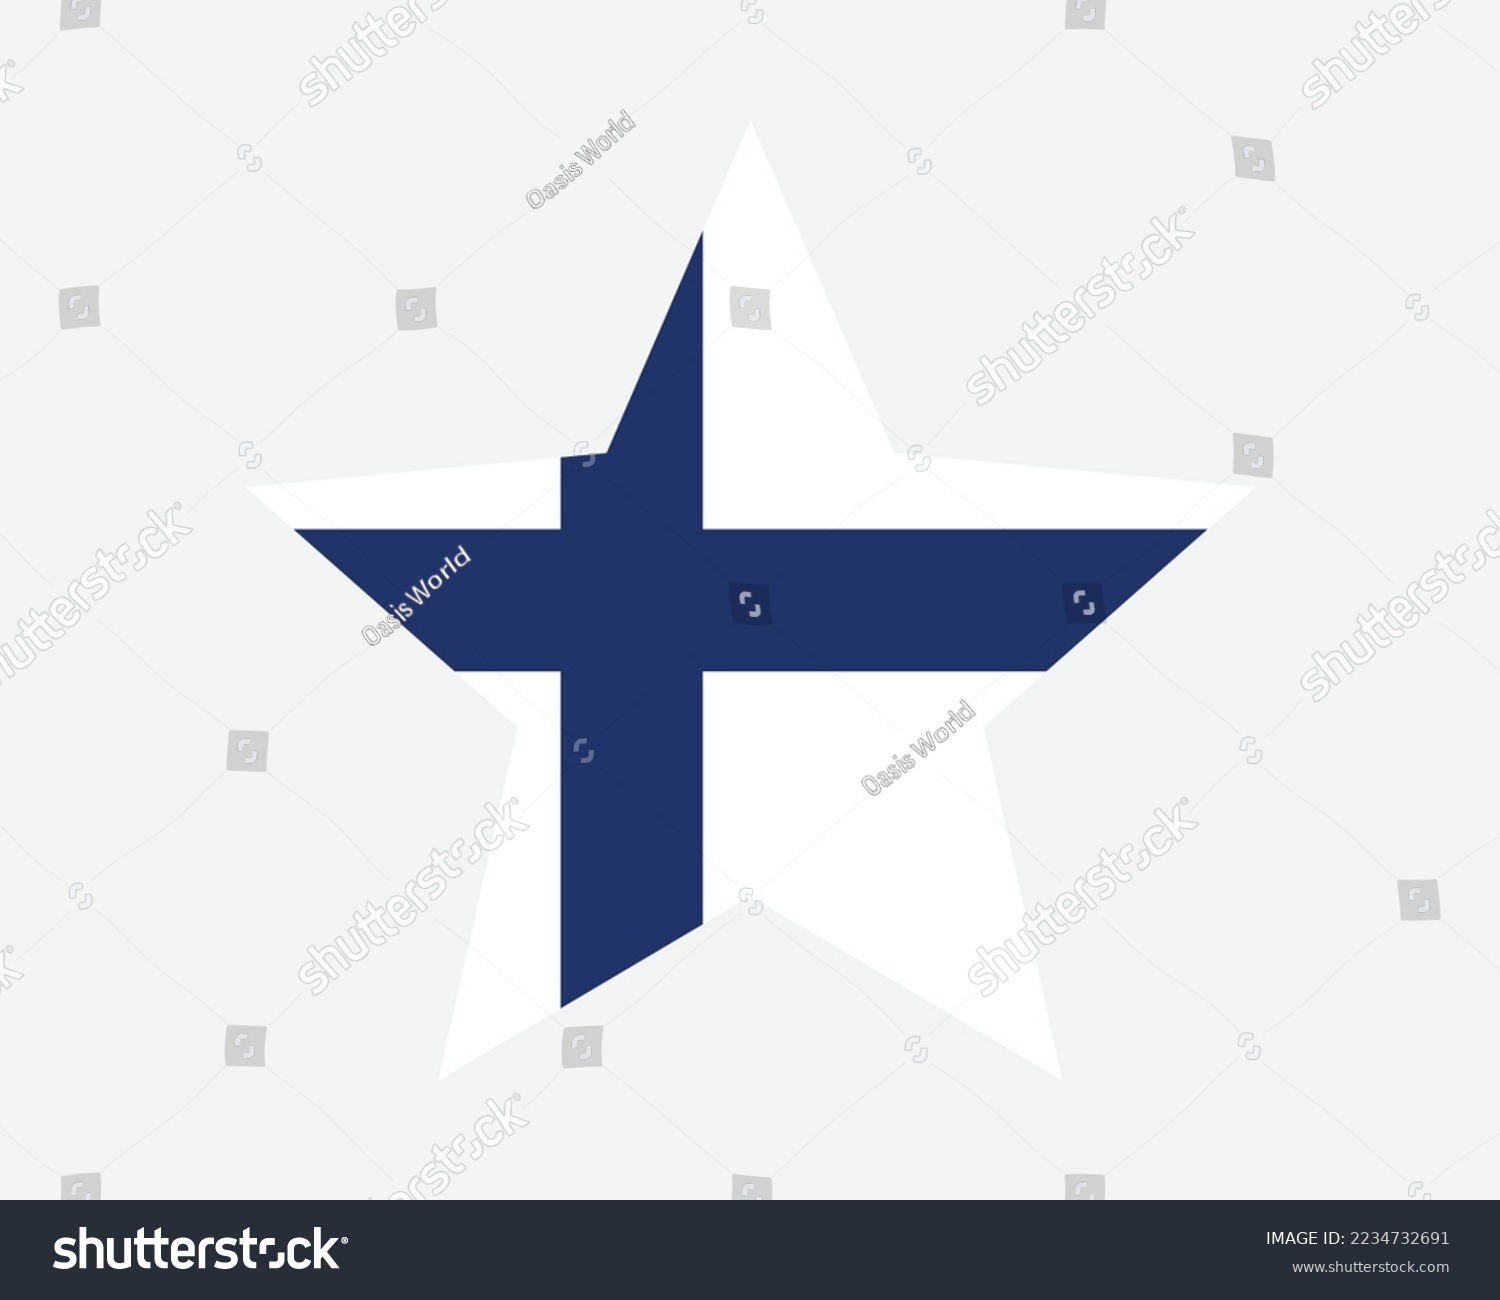 SVG of Finland Star Flag. Finnish Finn Star Shape Flag. Republic of Finland Country National Banner Icon Symbol Vector Flat Artwork Graphic Illustration svg